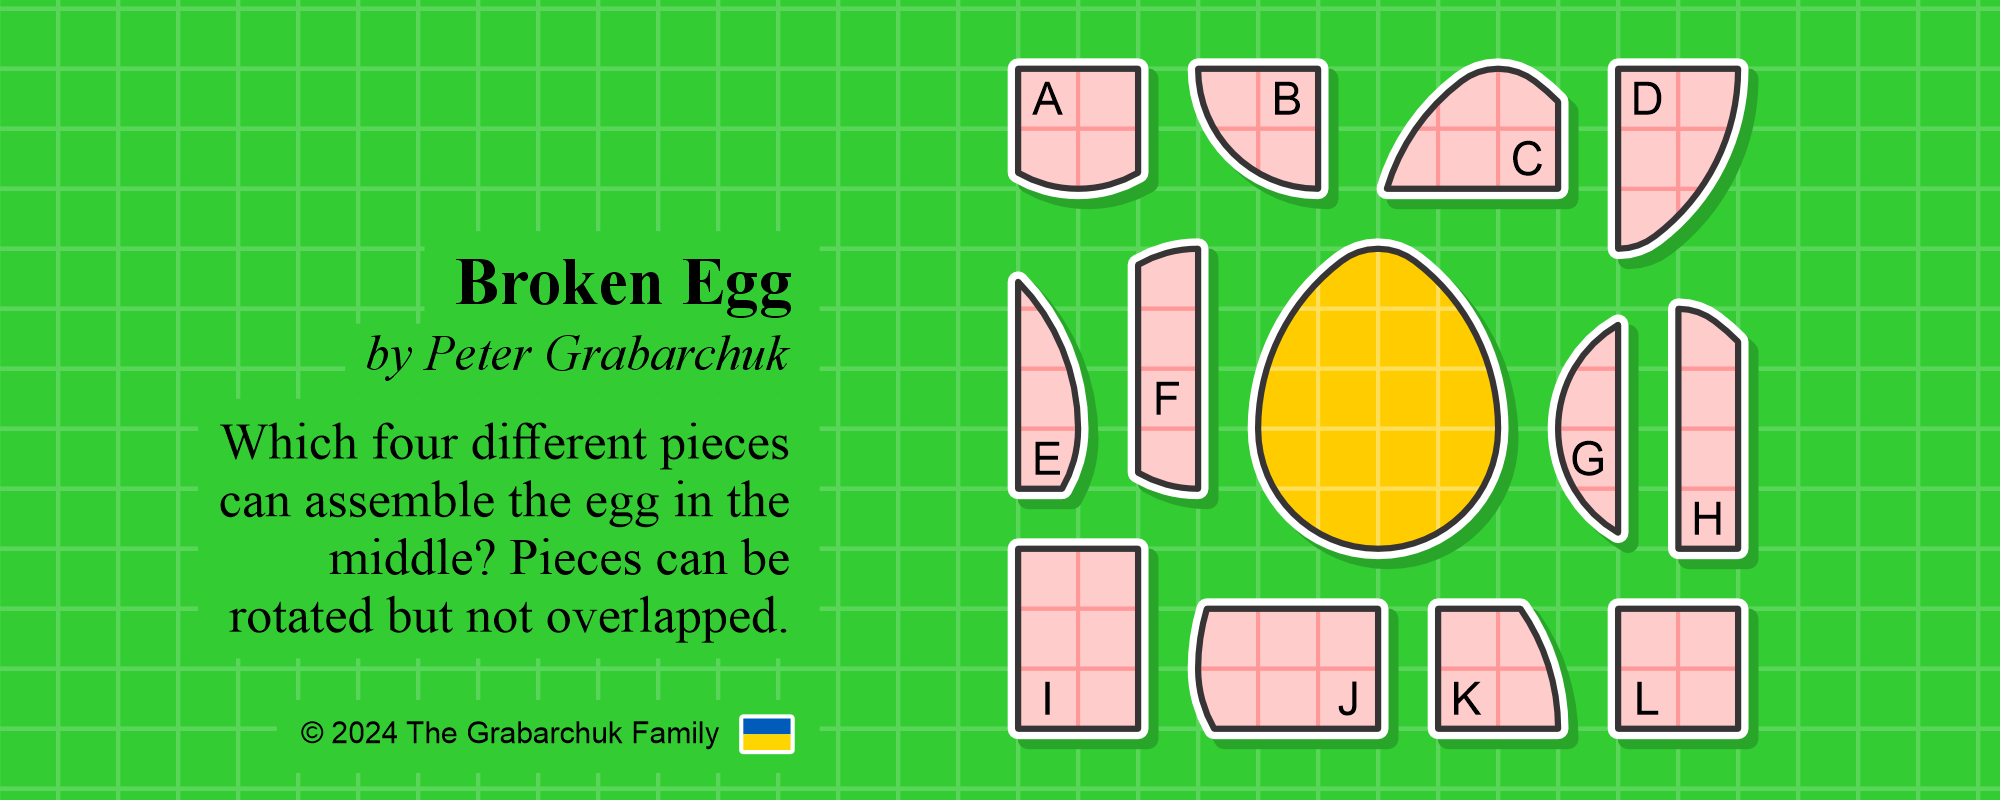 Broken Egg by Peter Grabarchuk